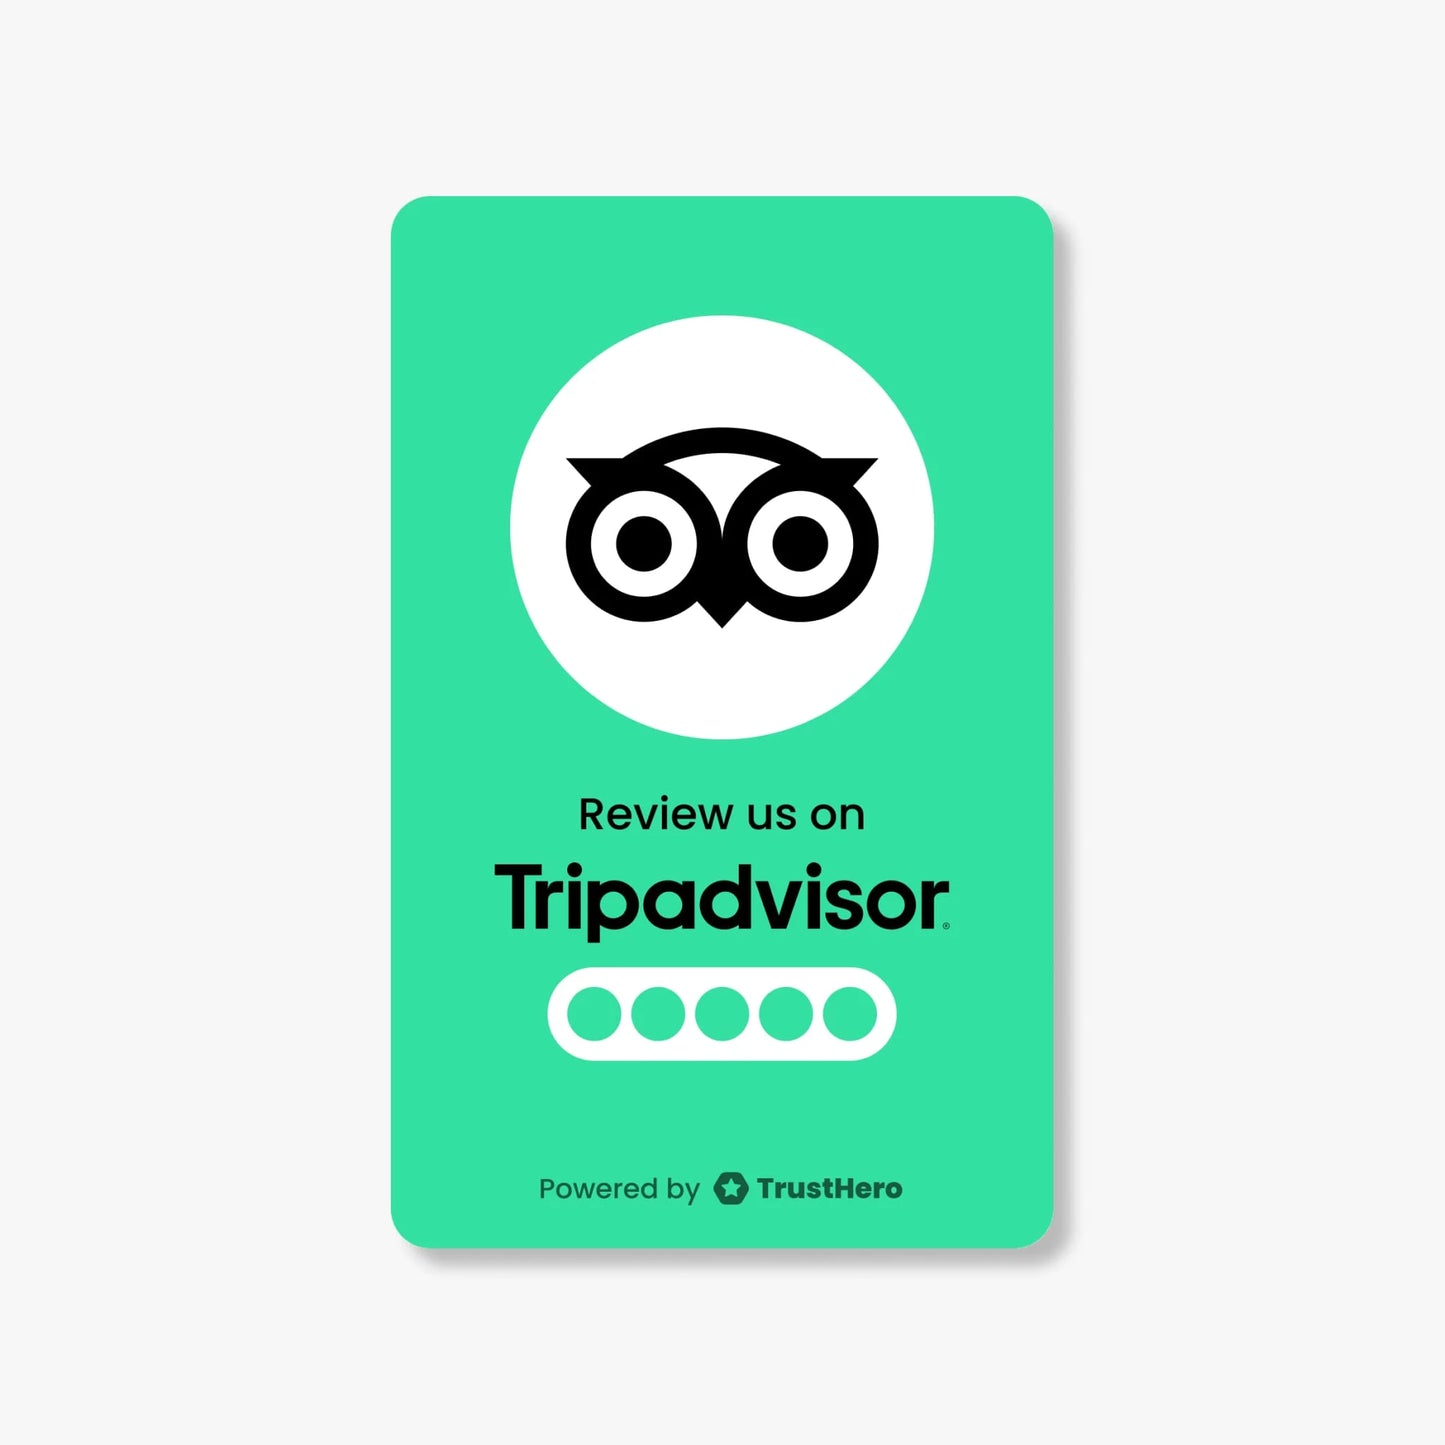 Tripadvisor Review Card